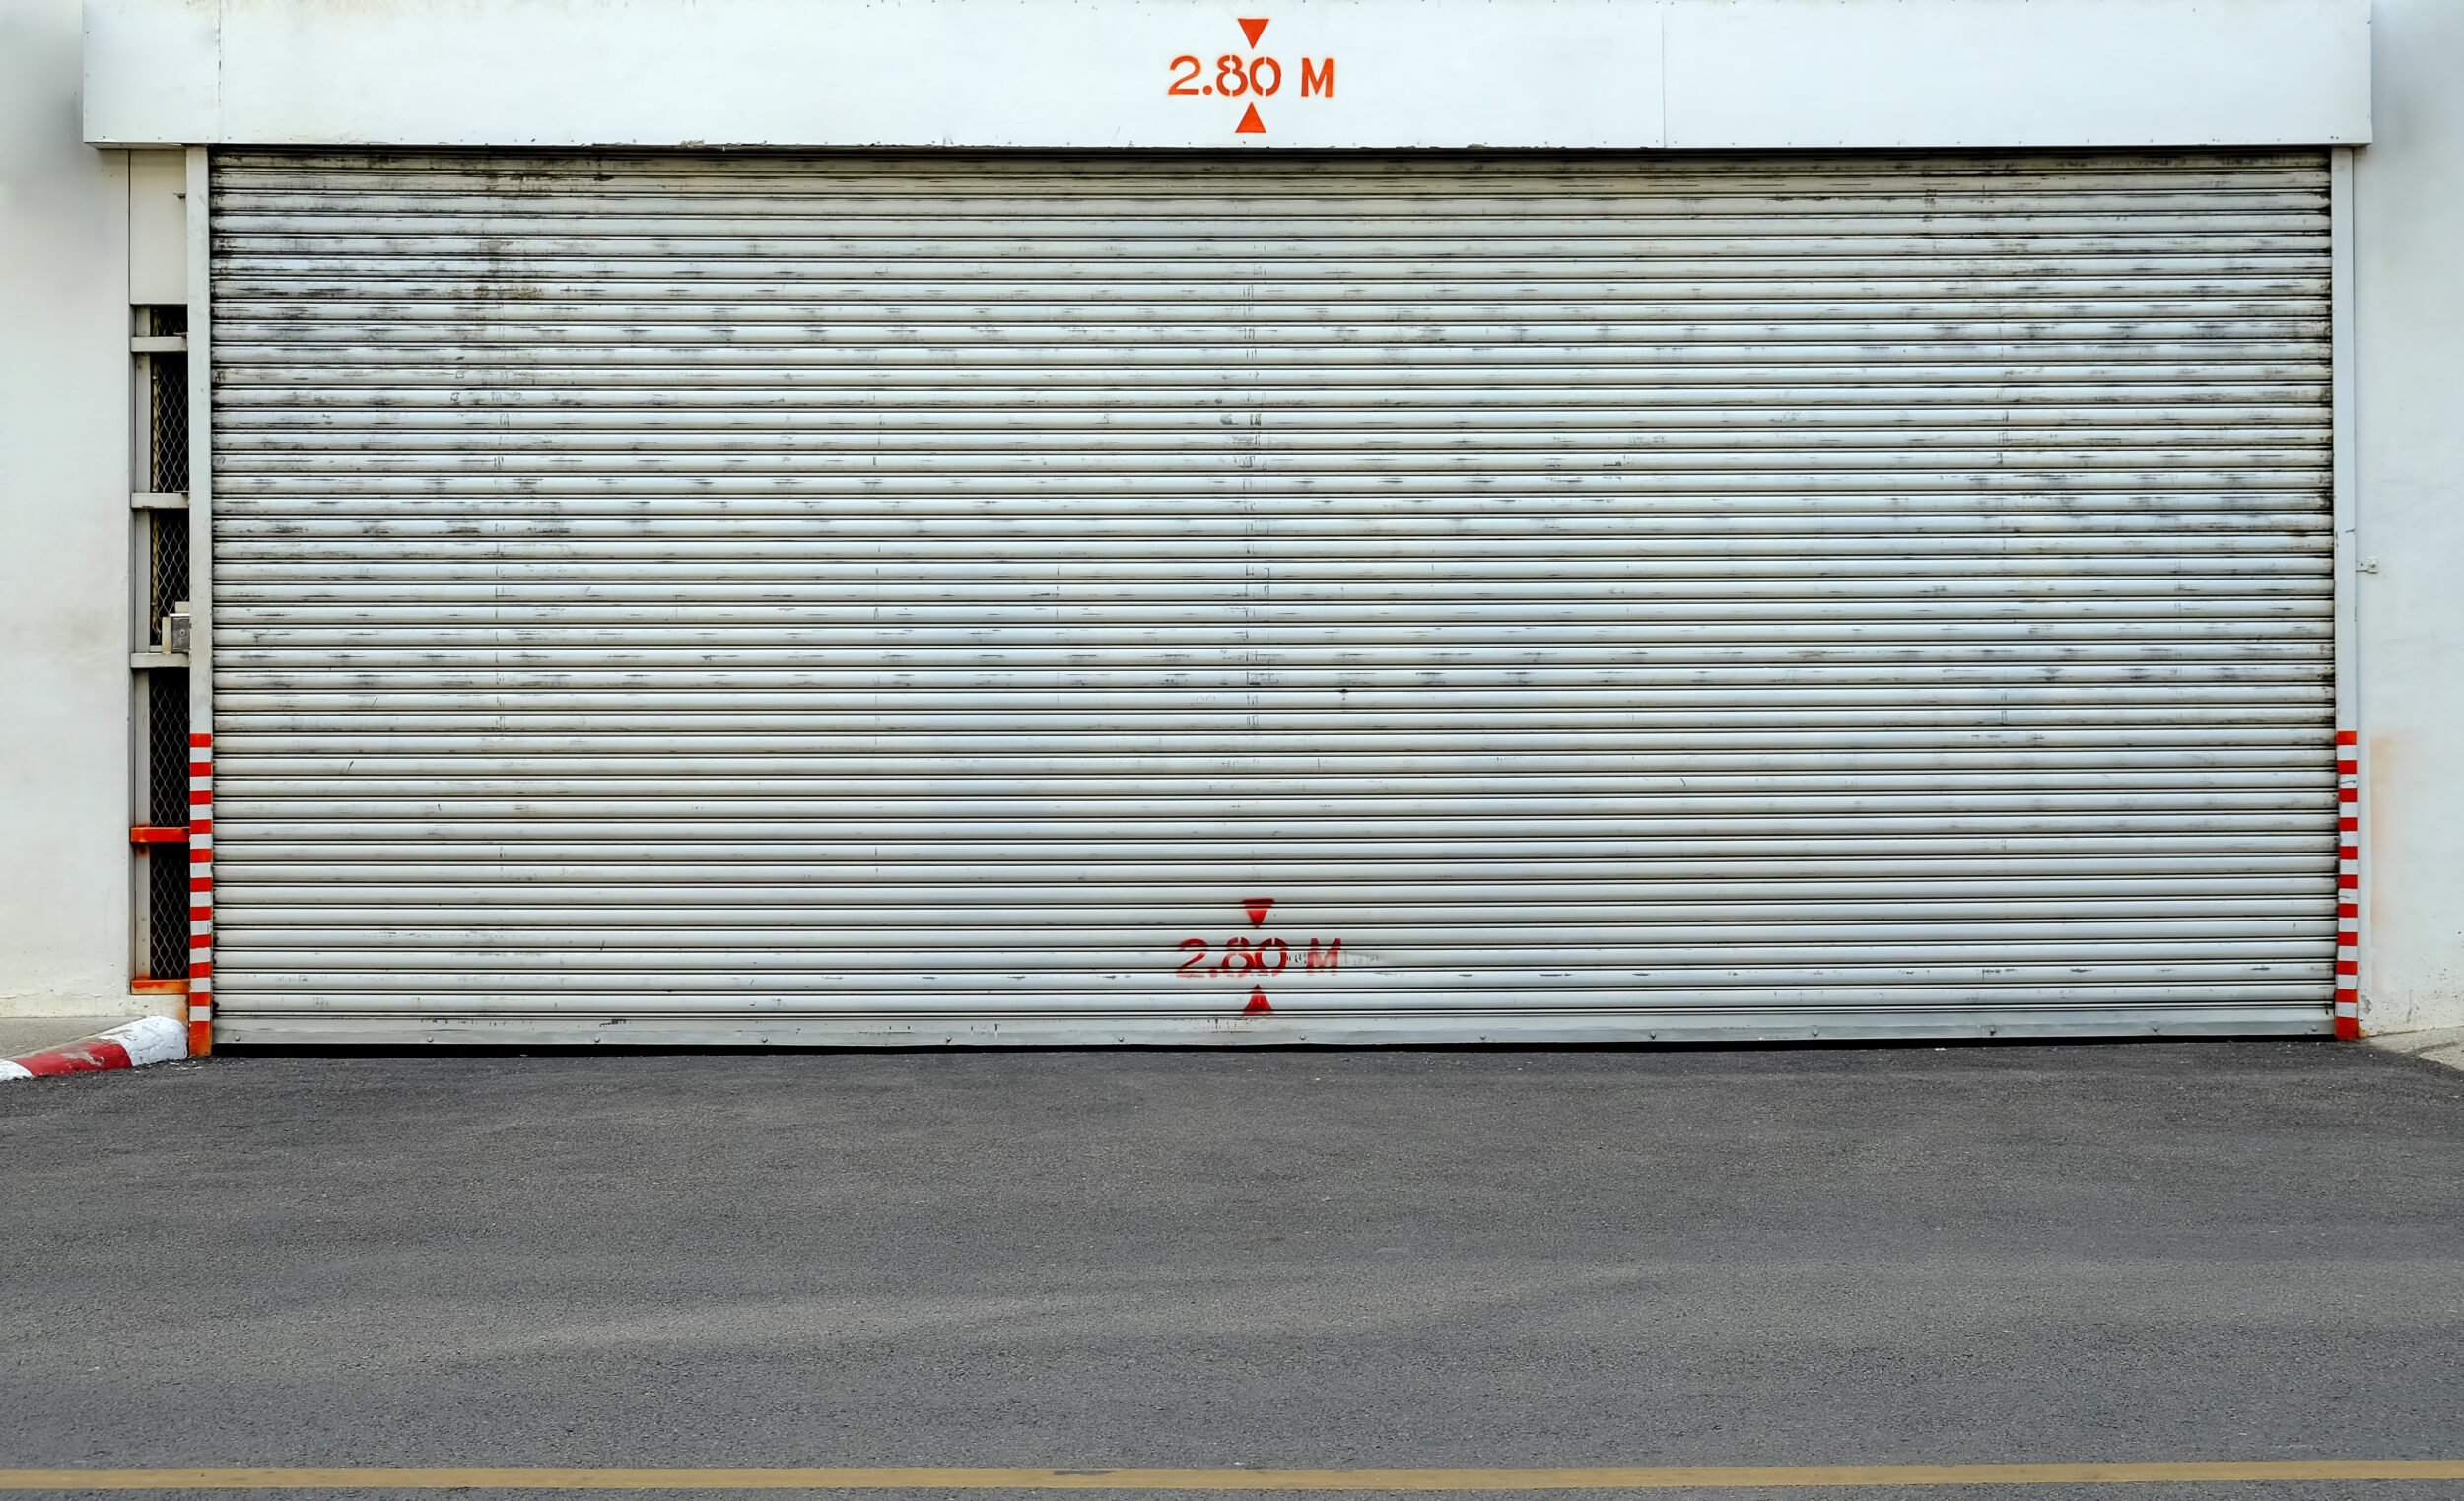 an image showing noisy garage doors